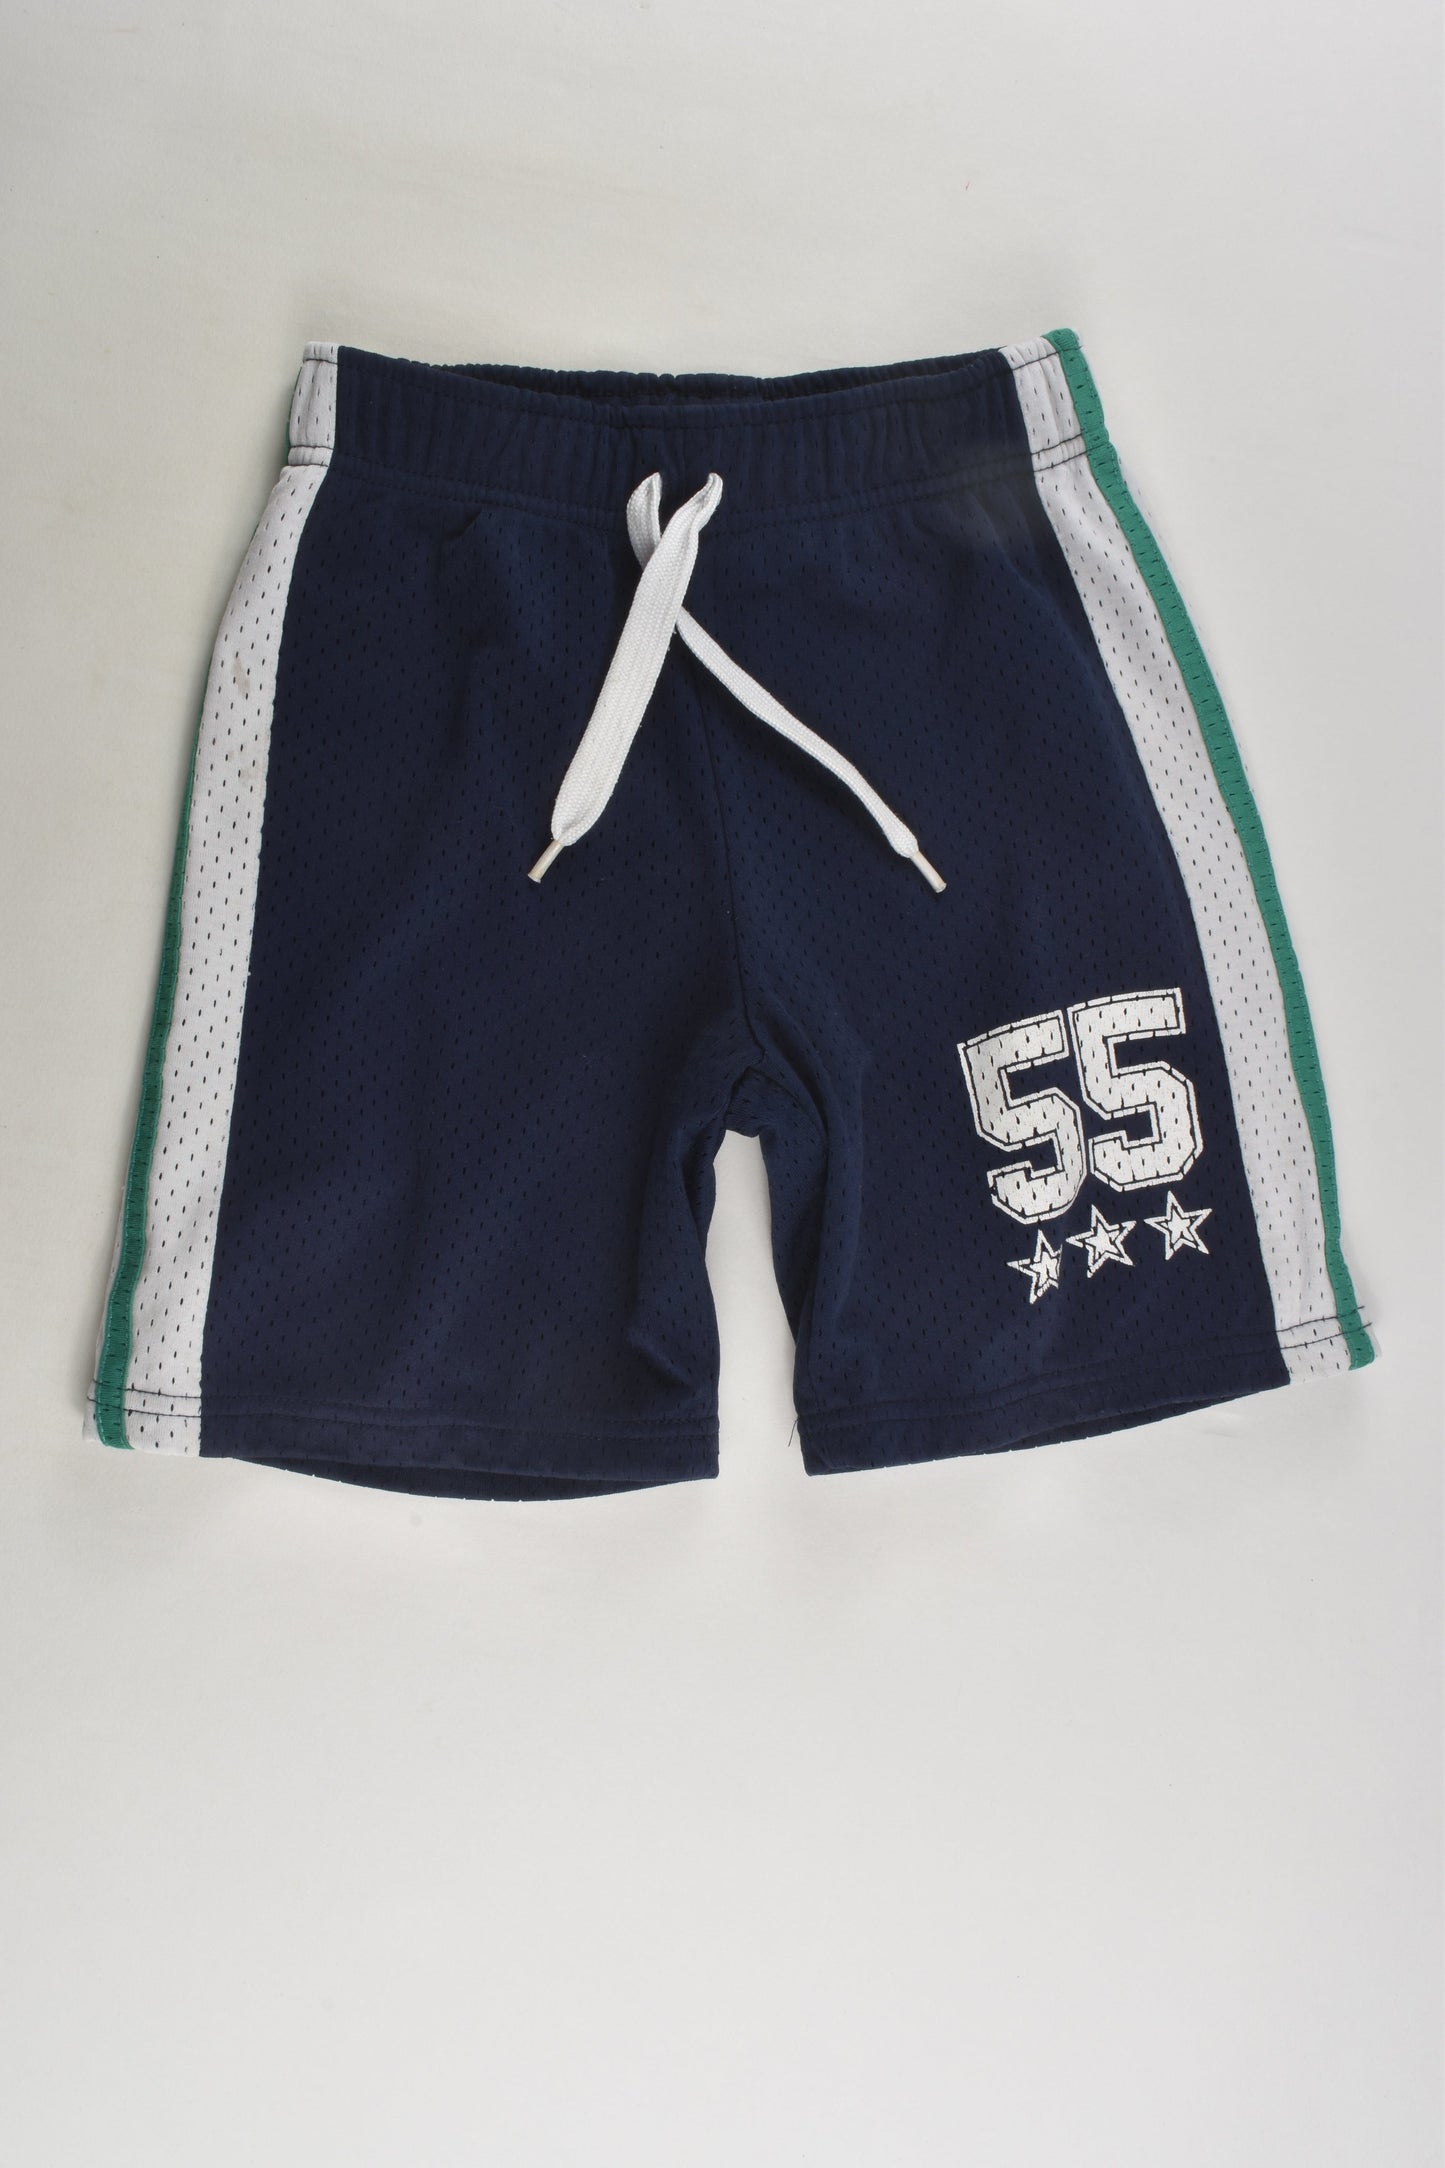 Emerson Junior Size 5 Sport Shorts